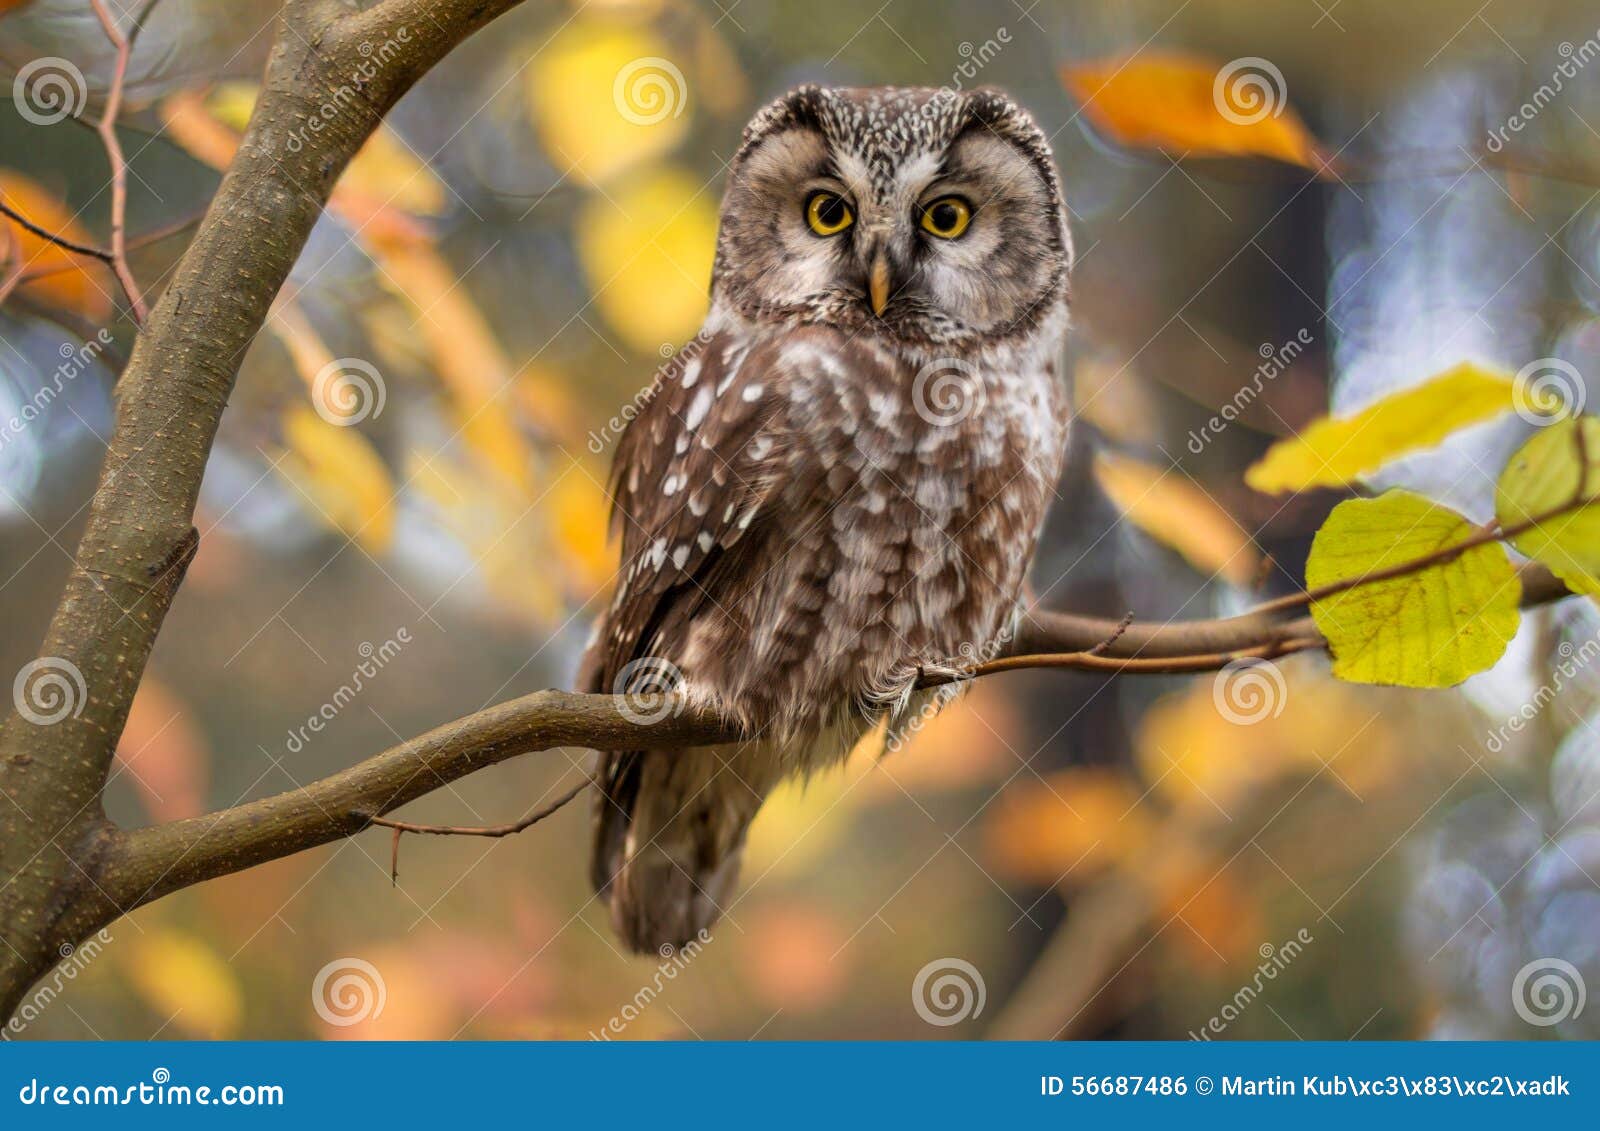 boreal owl in autumn leaves